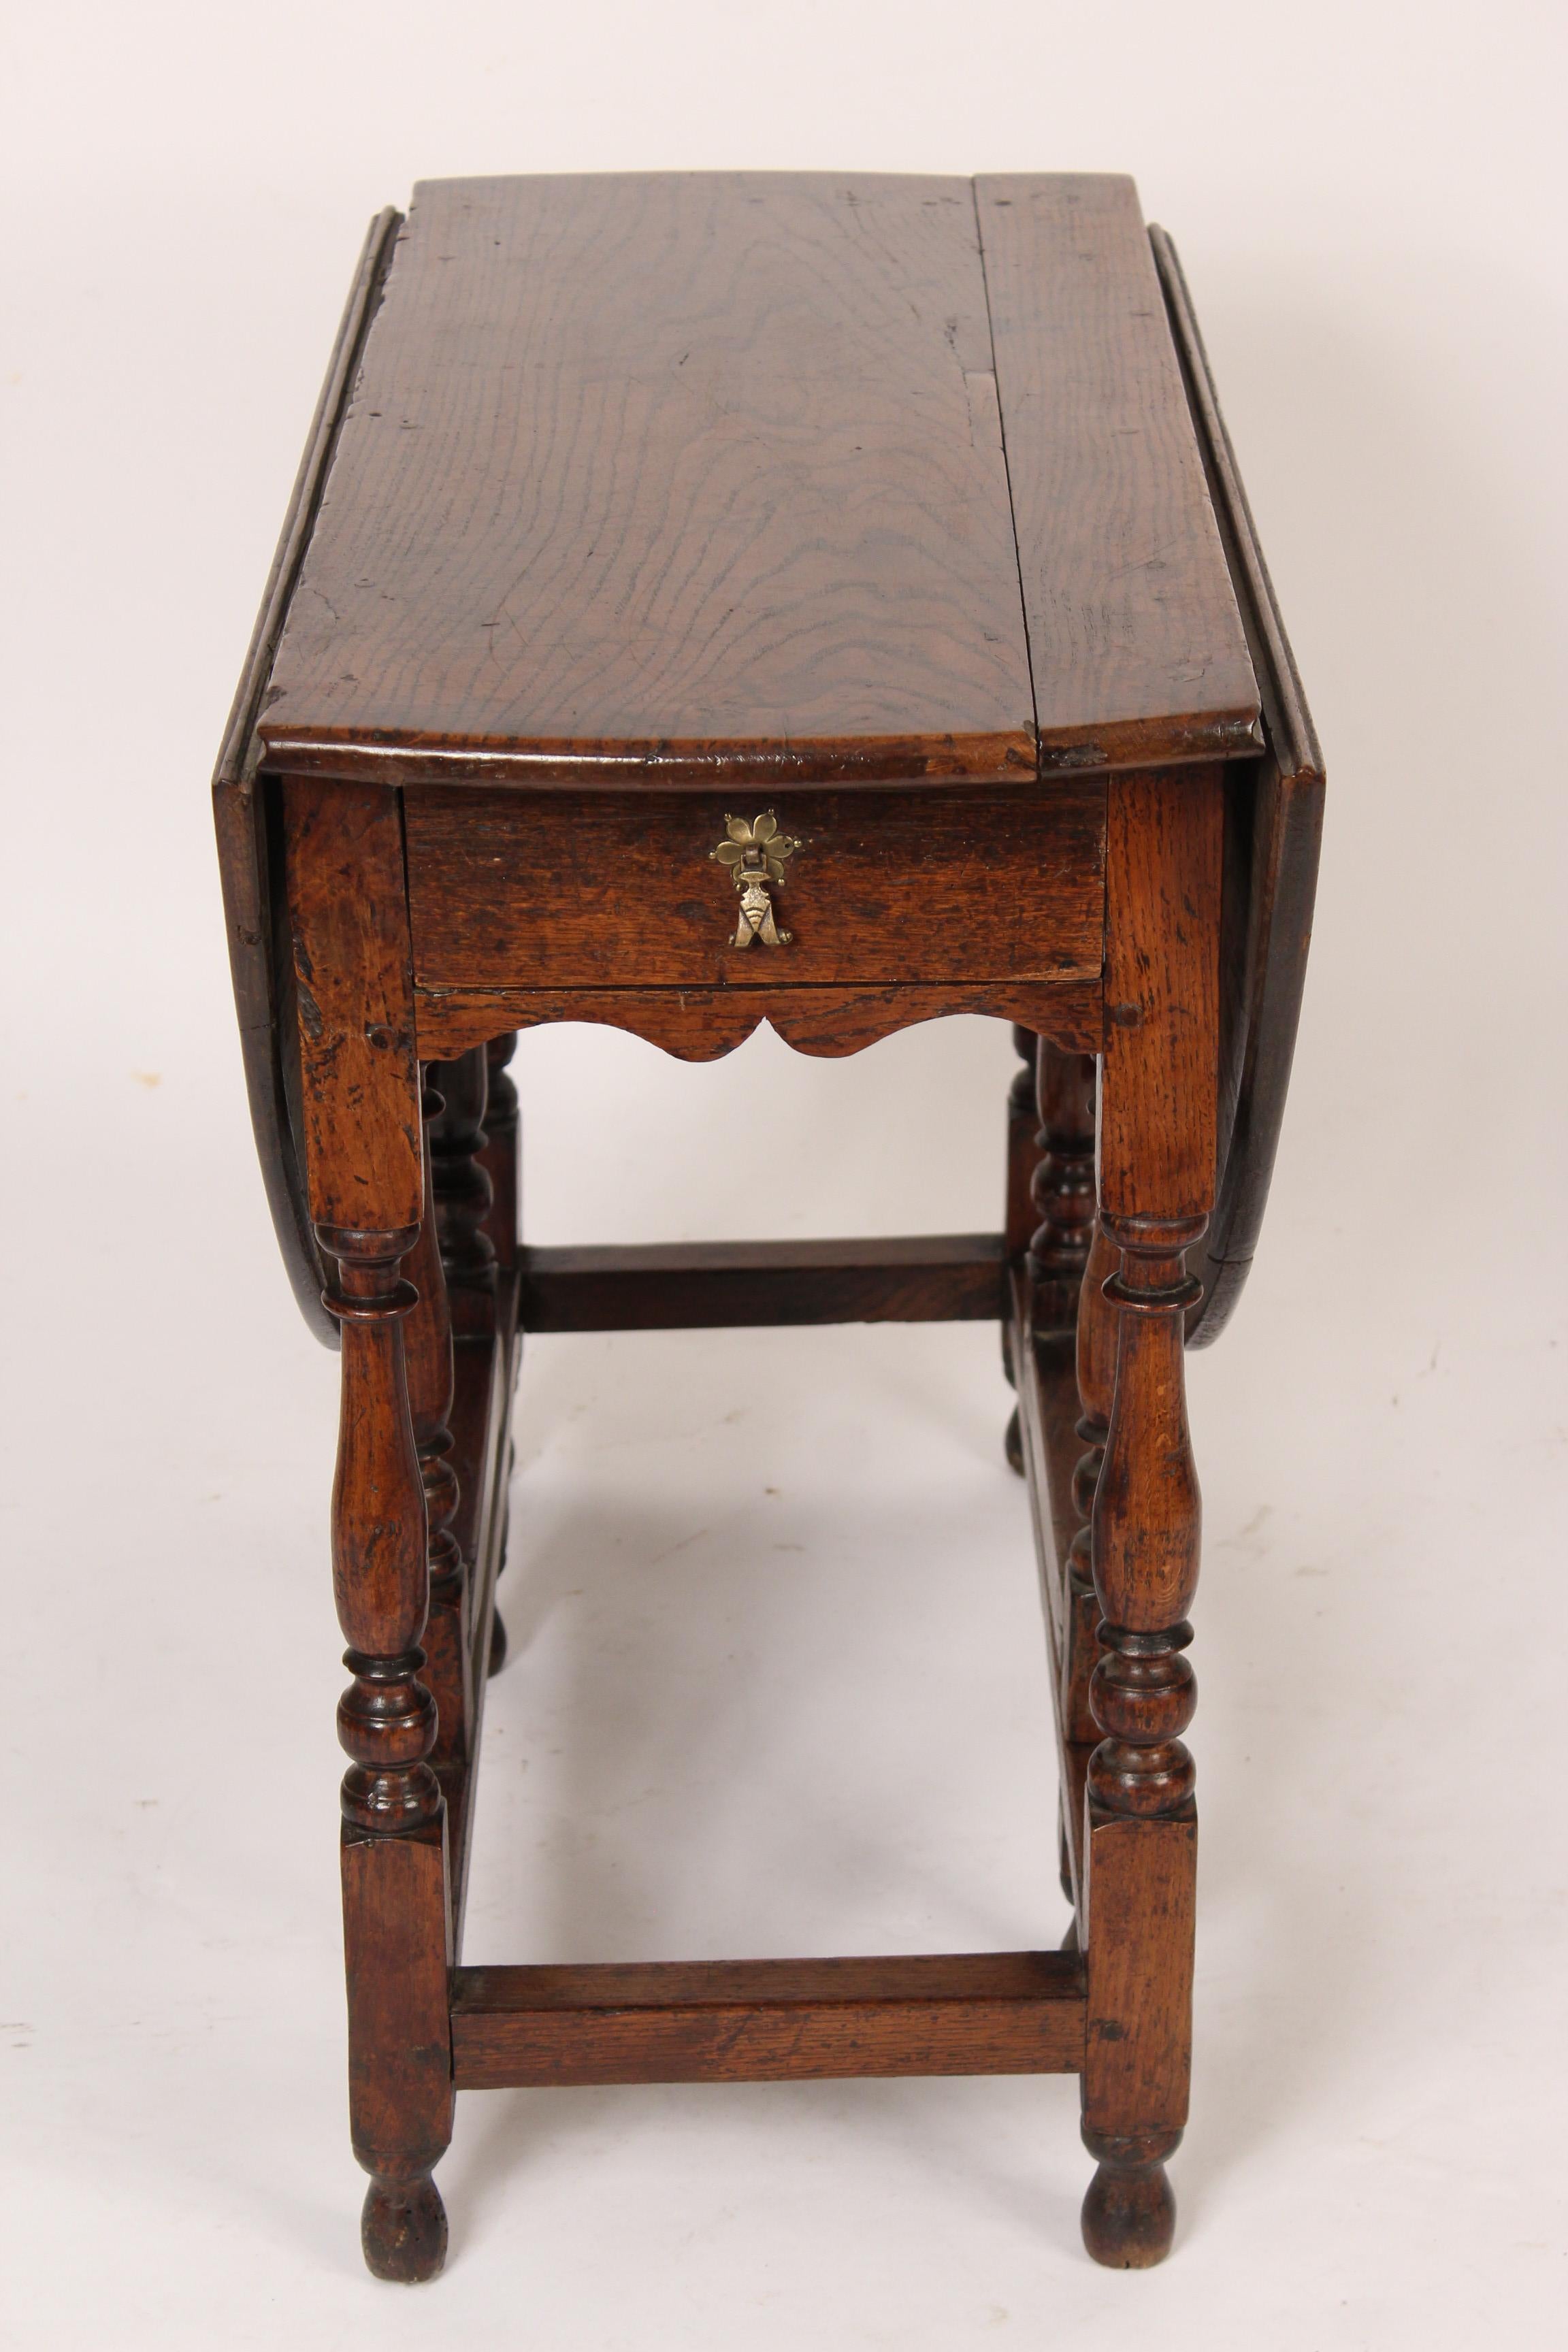 Antique English oak gate leg table, early 19th century. Each drop leaf is 16